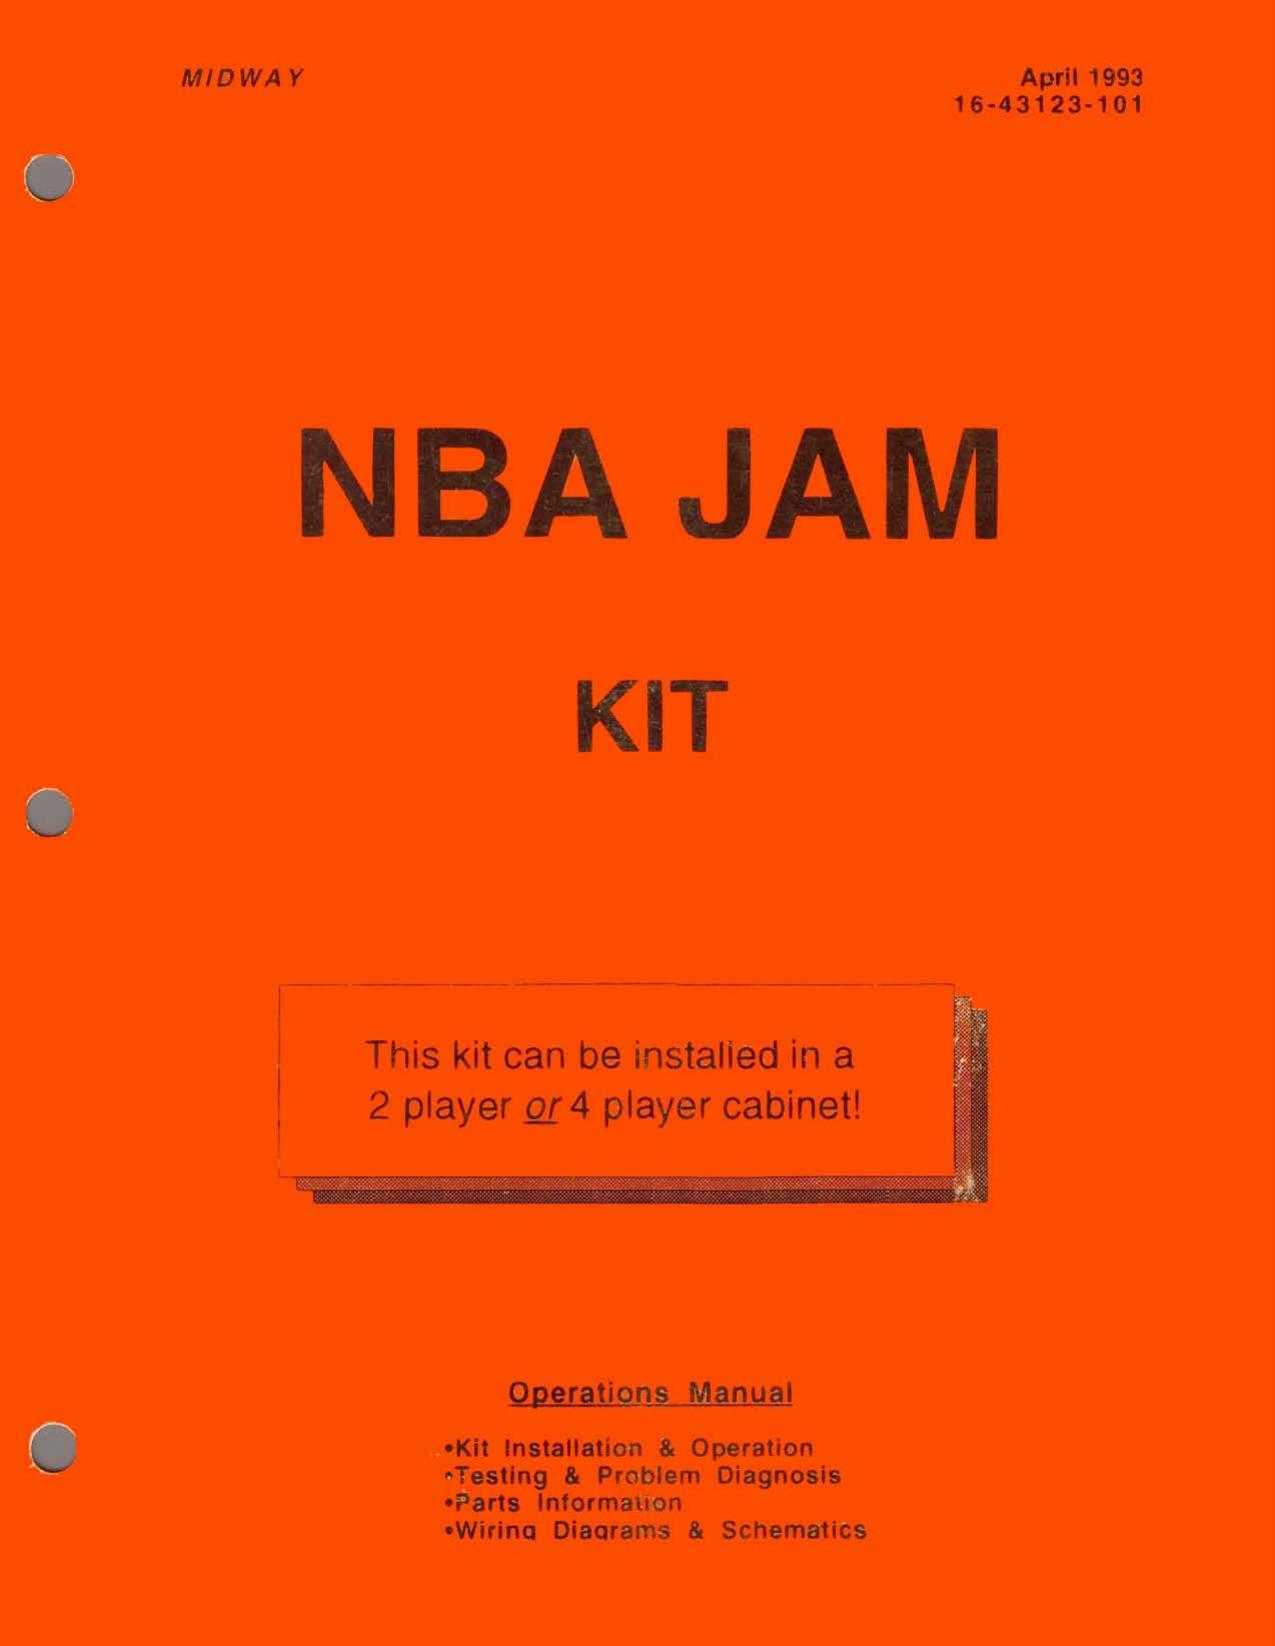 NBA Jam Kit Operations Manual (16-43123-101) April 1993